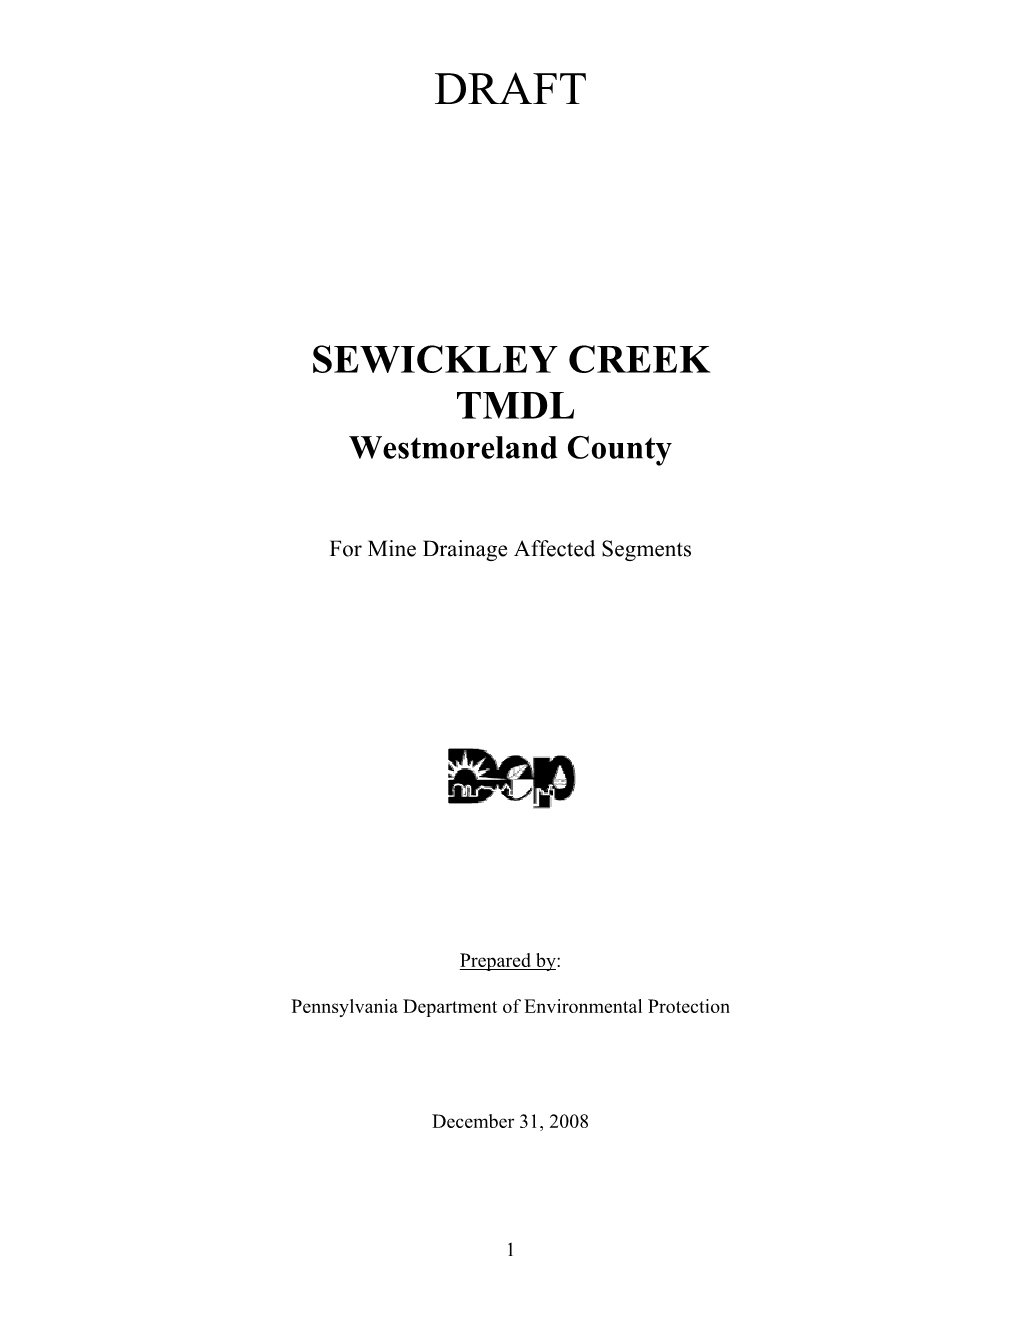 SEWICKLEY CREEK TMDL Westmoreland County